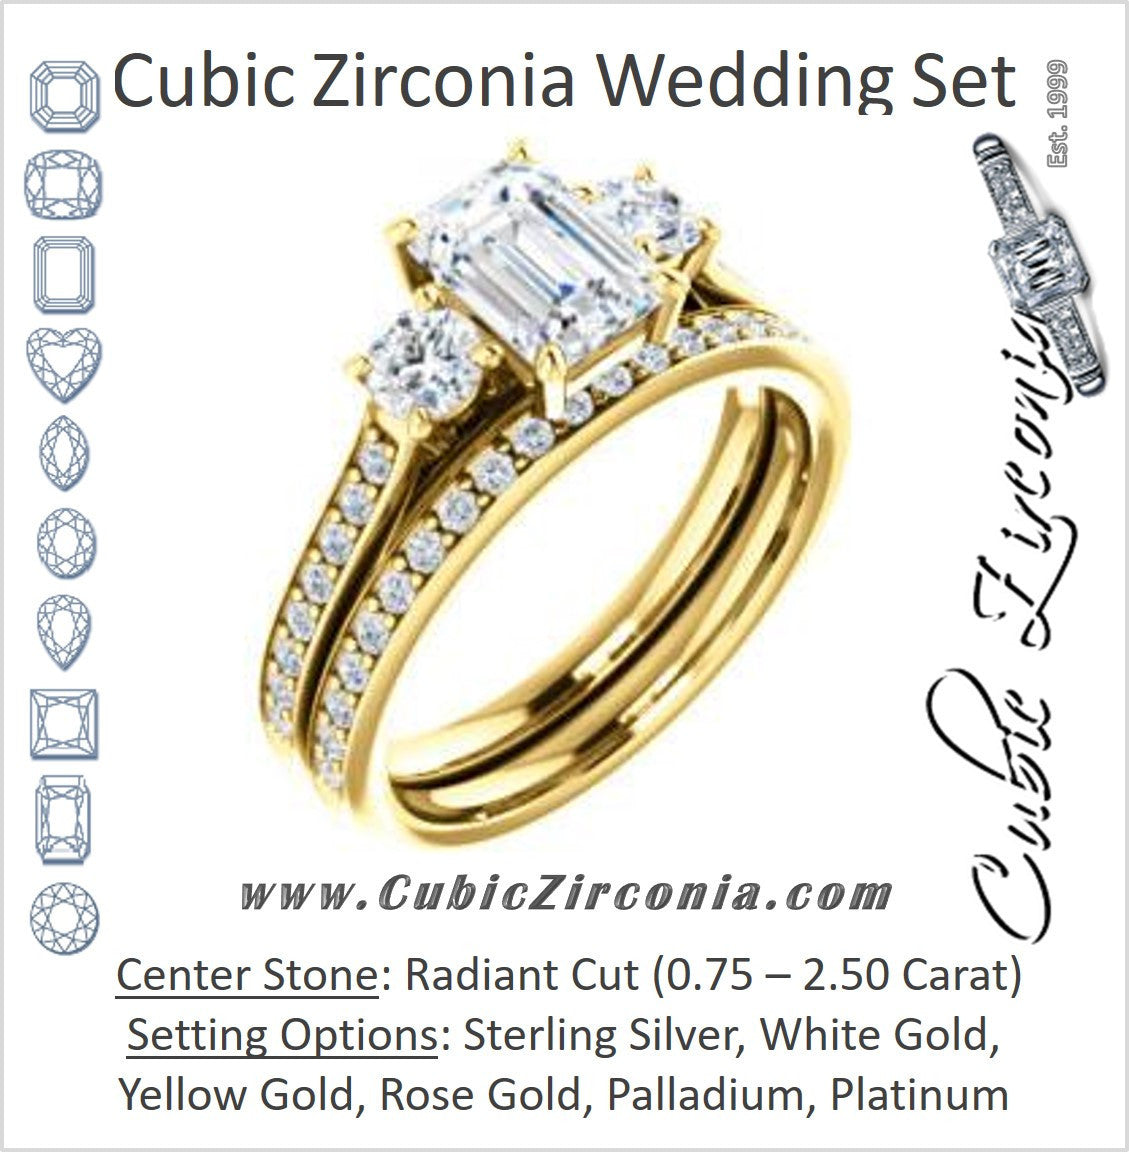 CZ Wedding Set, featuring The Tess engagement ring (Customizable Radiant Cut Trellis-Enhanced Bridge Setting with Semi-Pavé Band)